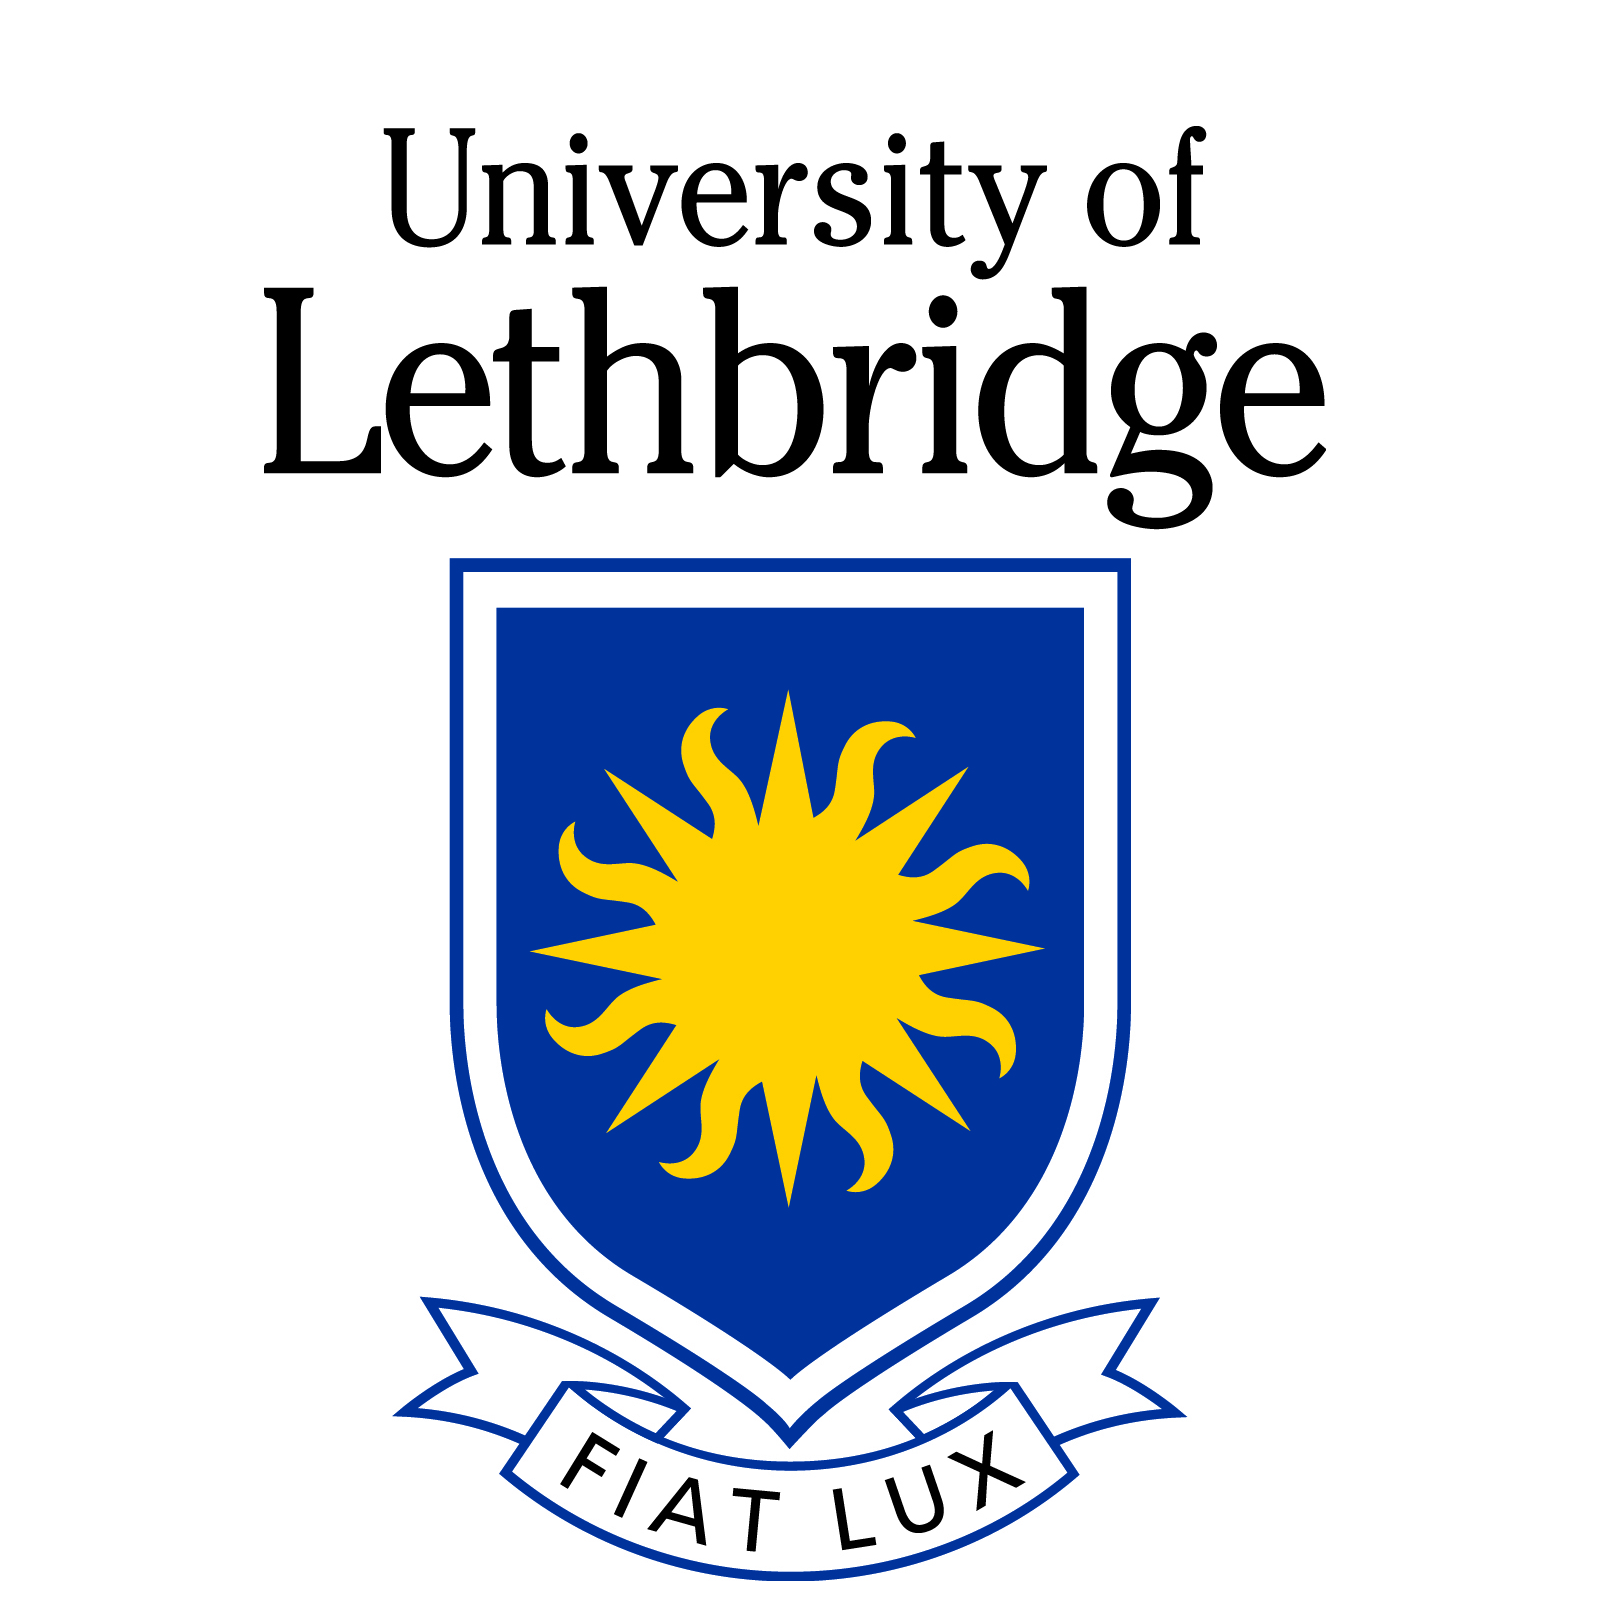 University of Lethbridge